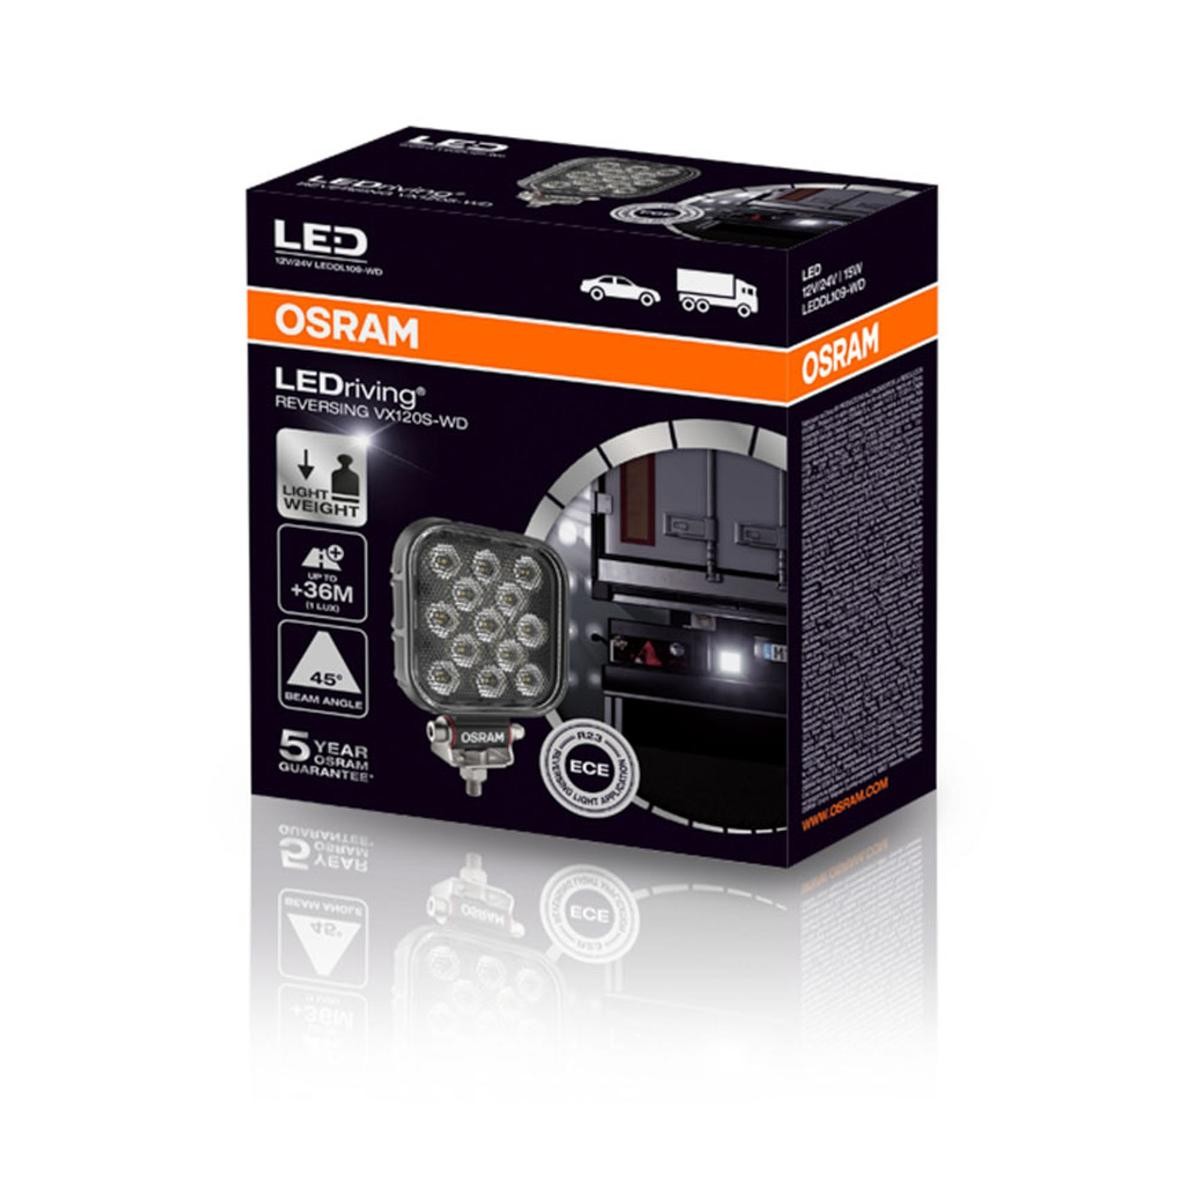 OSRAM LEDriving driving lights - Value Series LEDDL109WD Reverse lights VW Polo Mk4 1.2 60 hp Petrol 2009 price